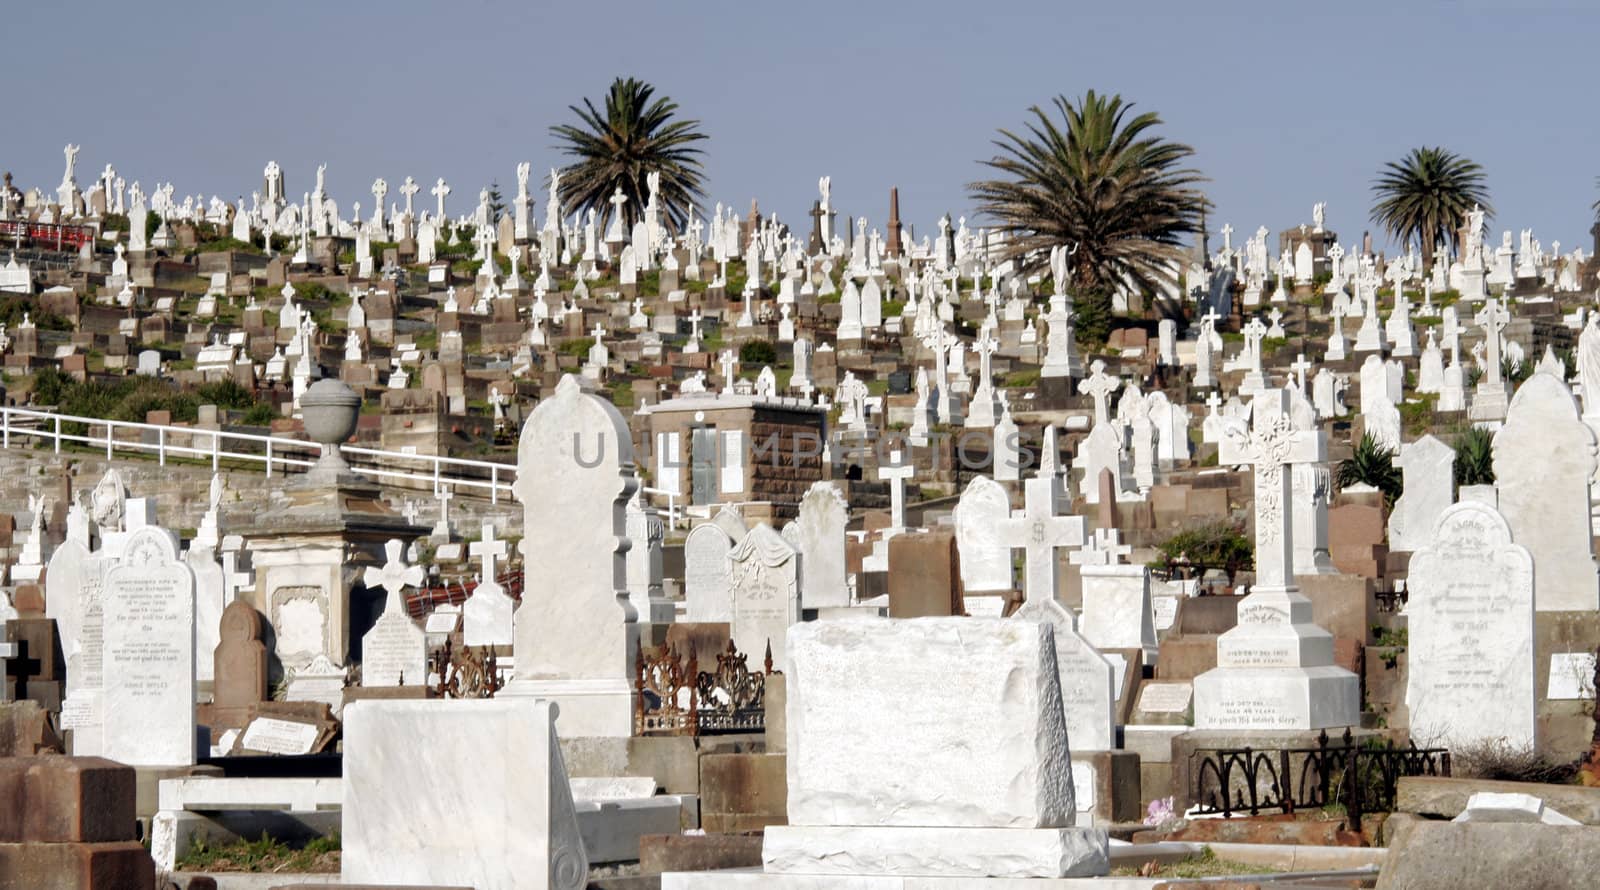 Cemetery by thorsten